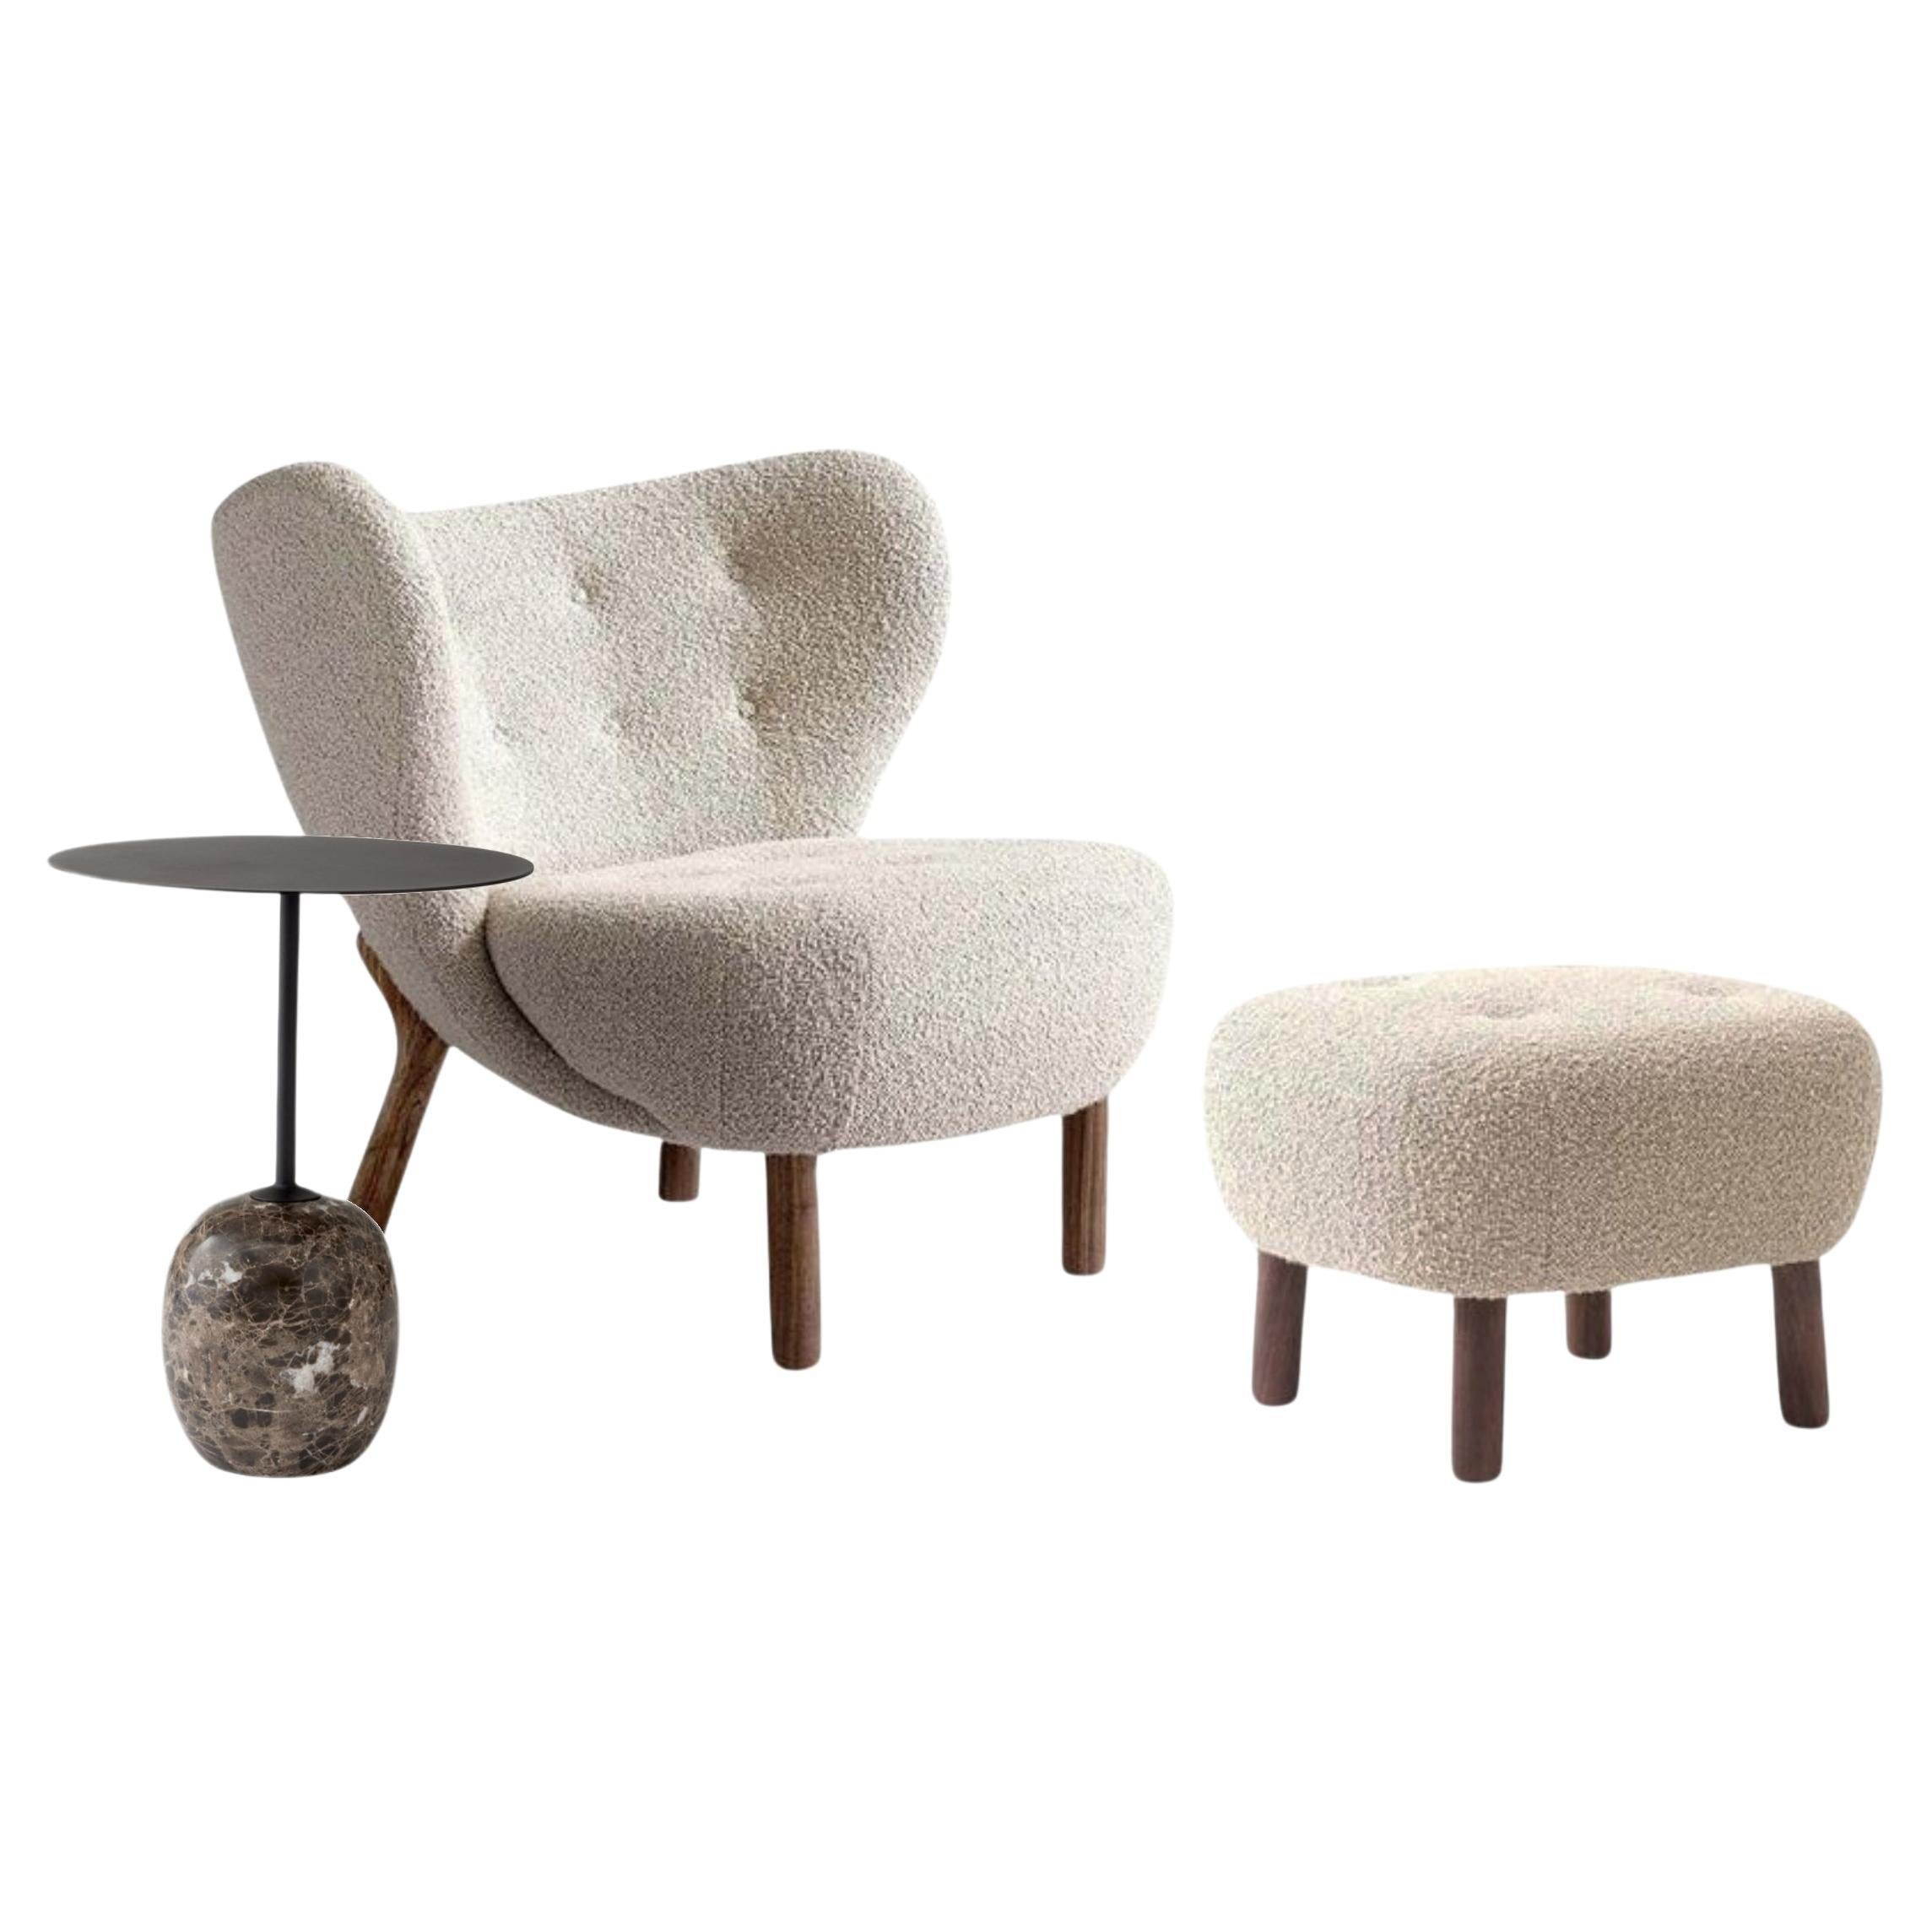 Luca Nichetto Lounge Chairs